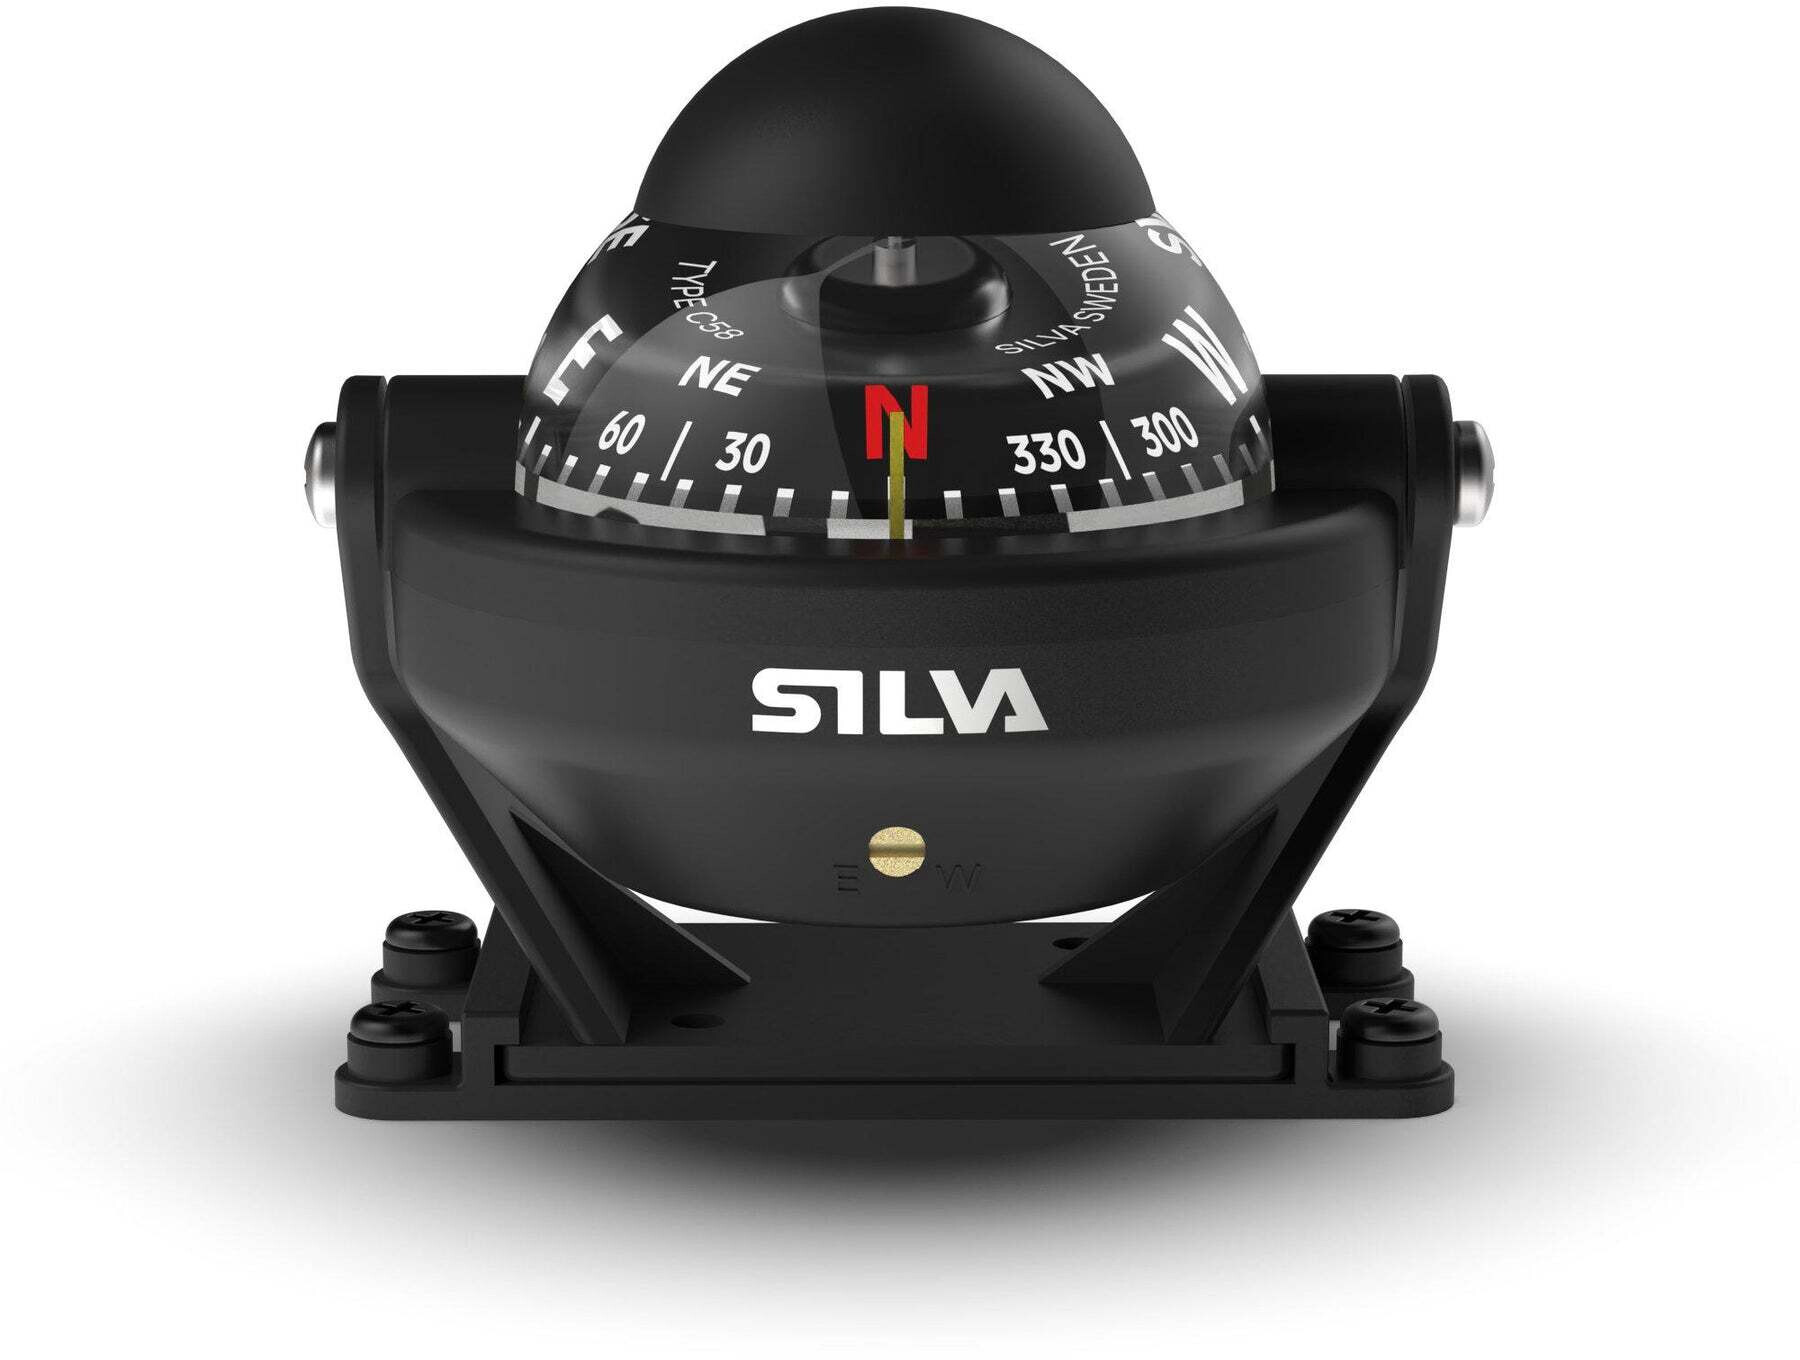 Silva C58 Kompass für Auto & Boot